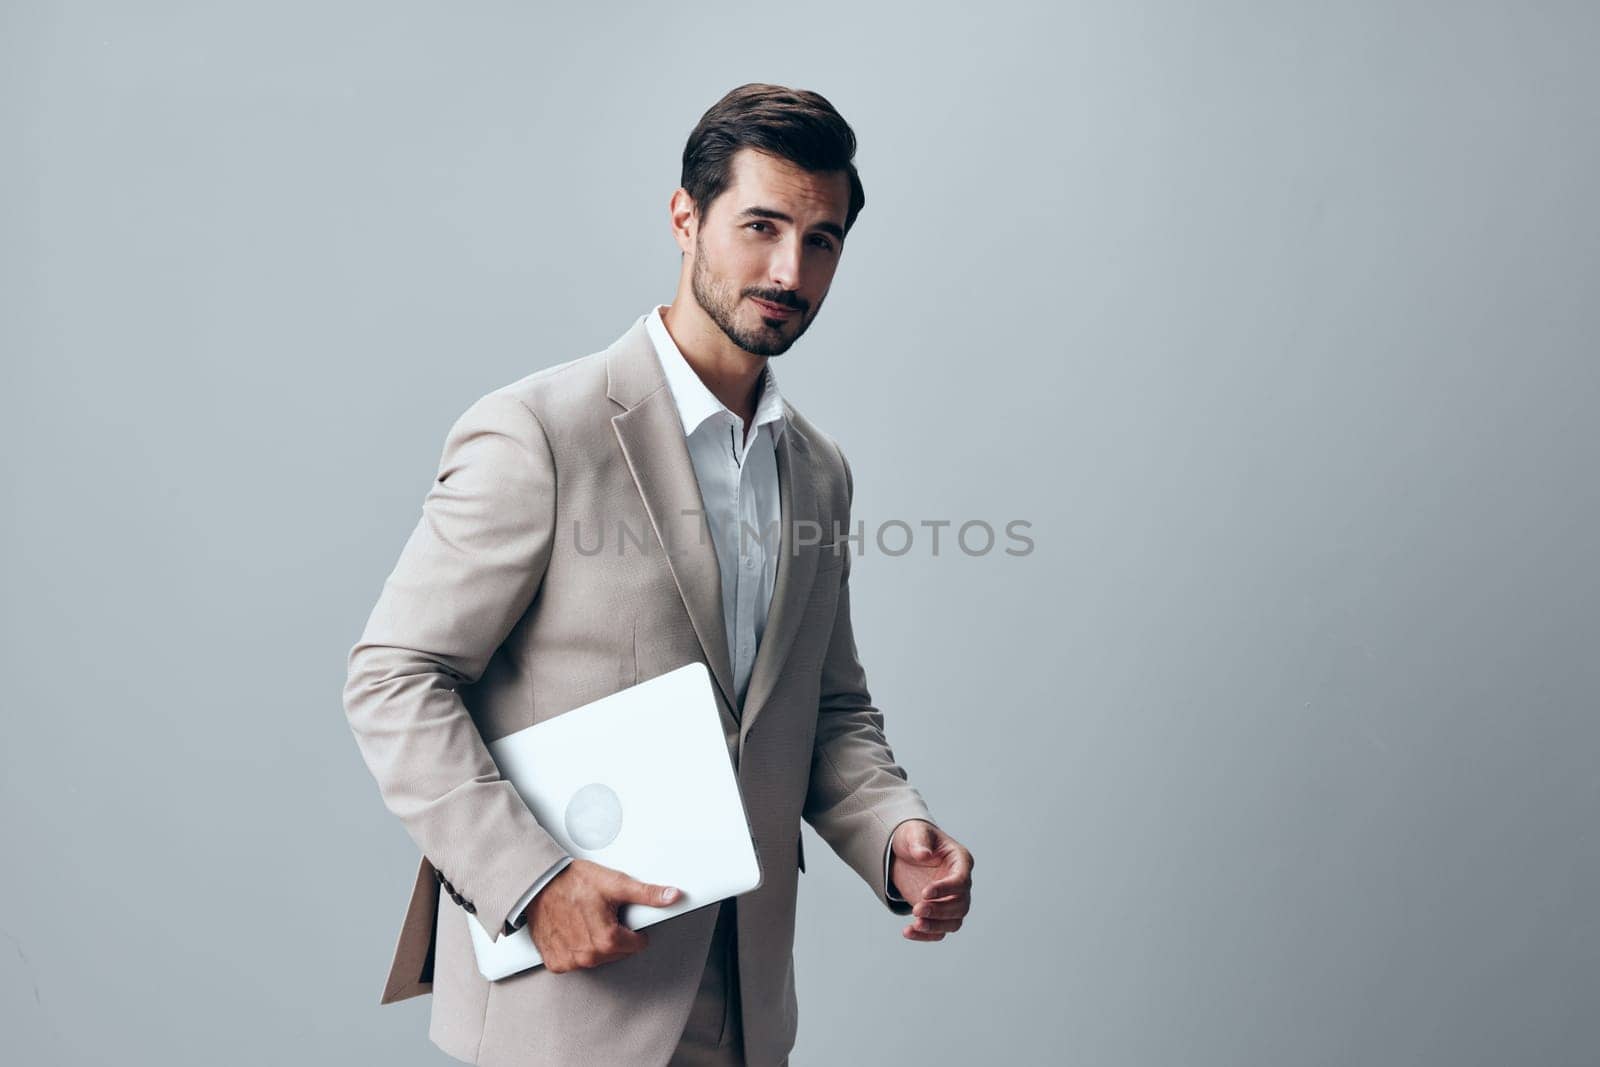 freelancer man business internet smiling copyspace job model computer laptop suit by SHOTPRIME